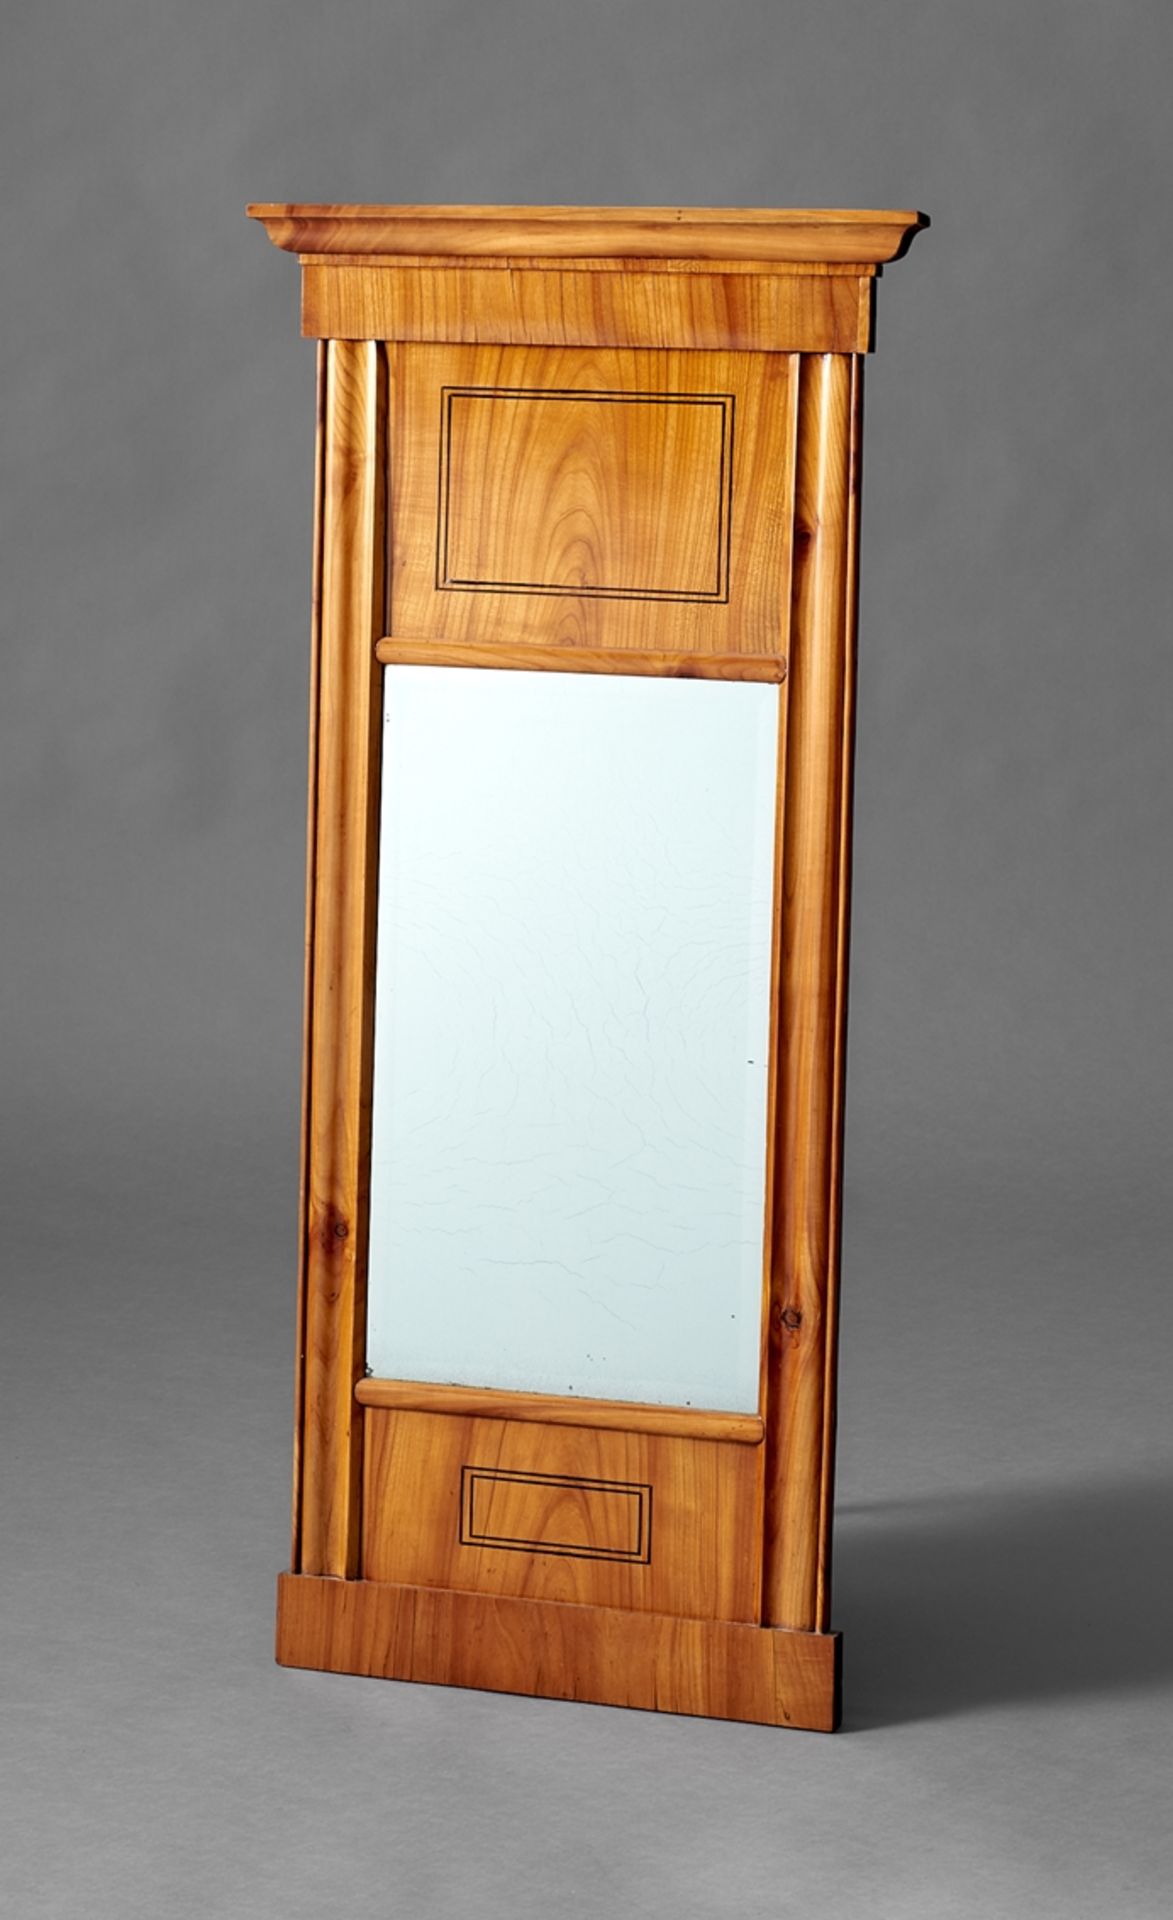 Biedermeier-Pfeilerspiegel. Kirschbaum. Anf. 19. Jh. 115 x 54 cm